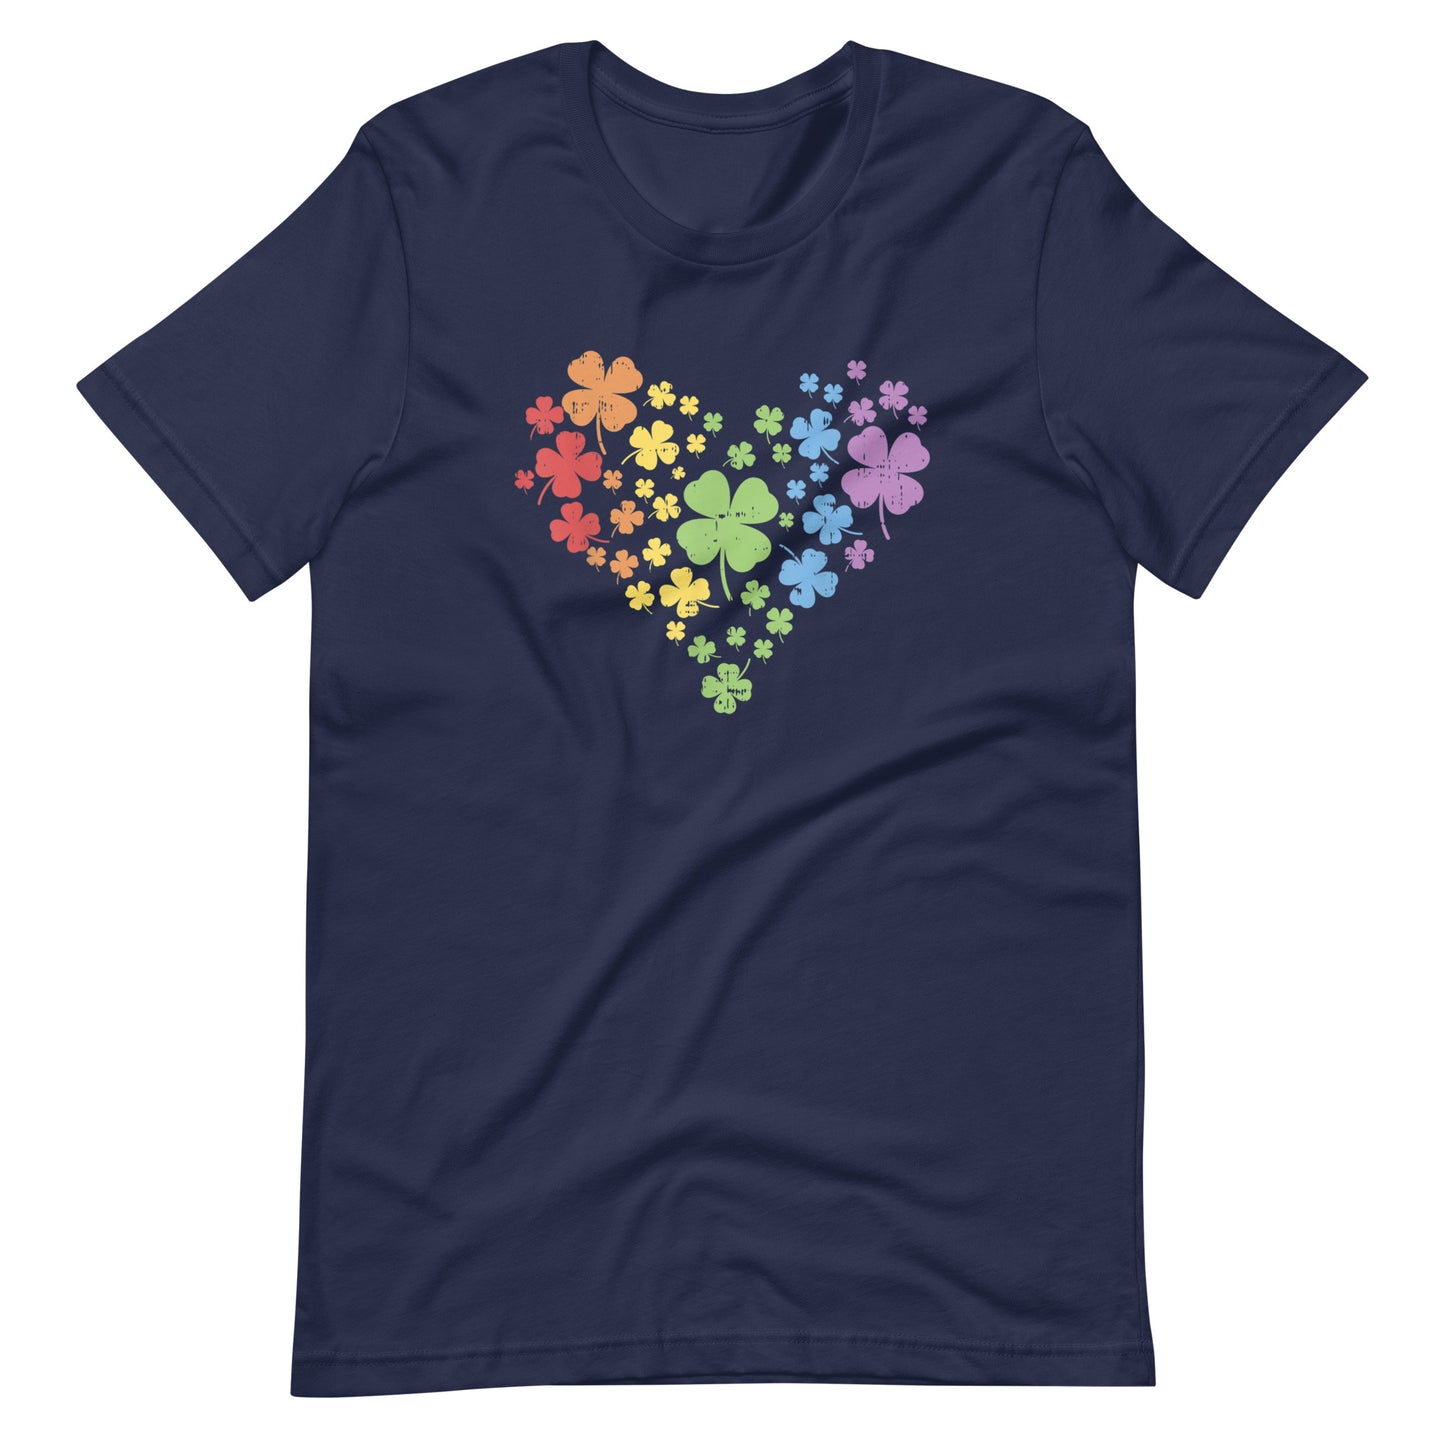 Bit of Love Gay Pride T-Shirt - gay pride apparel